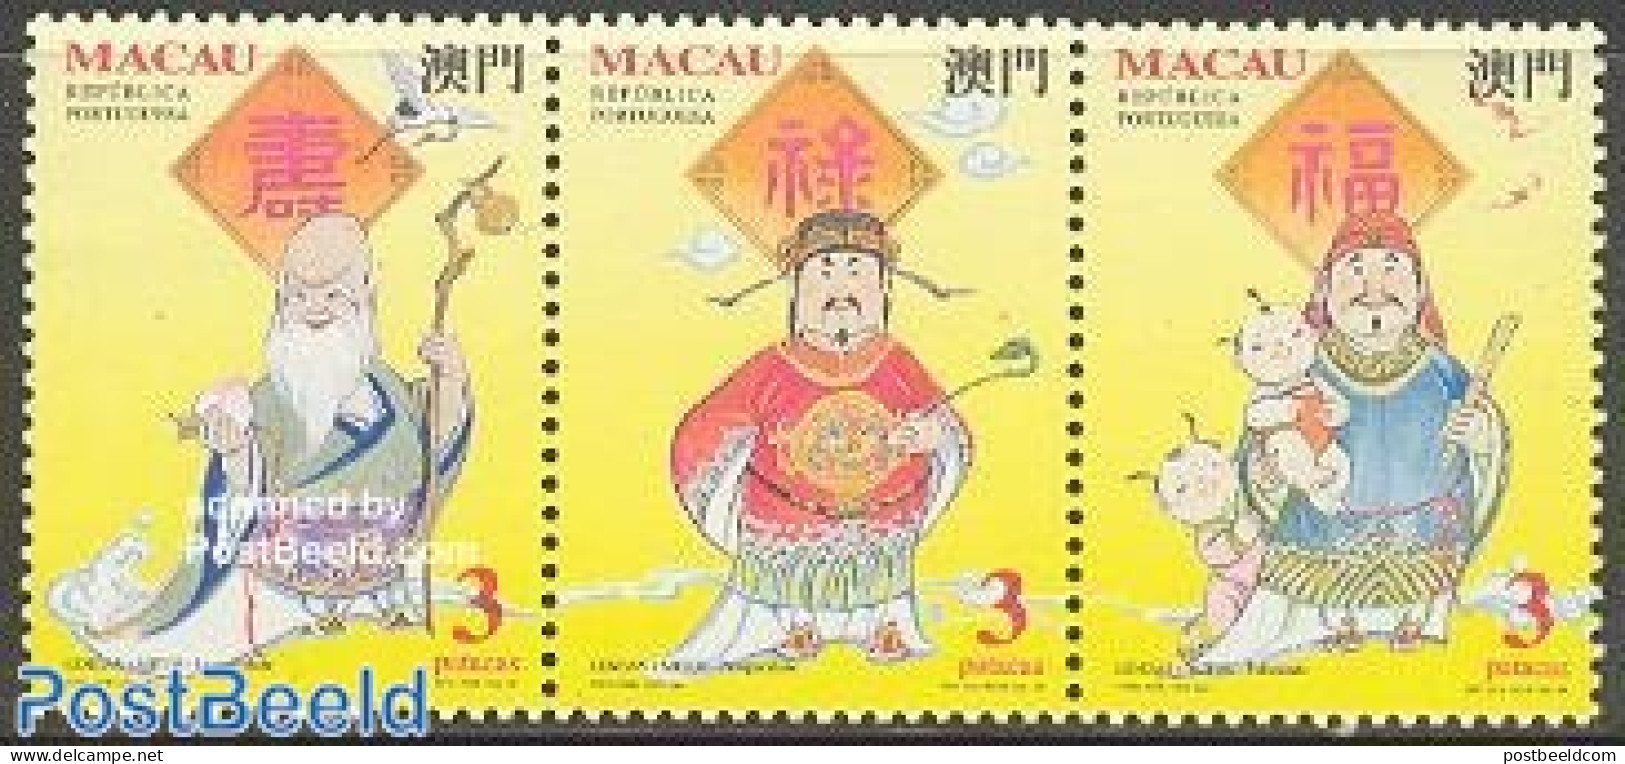 Macao 1994 Legends & Myths 3v [::], Mint NH, Fairytales - Ungebraucht